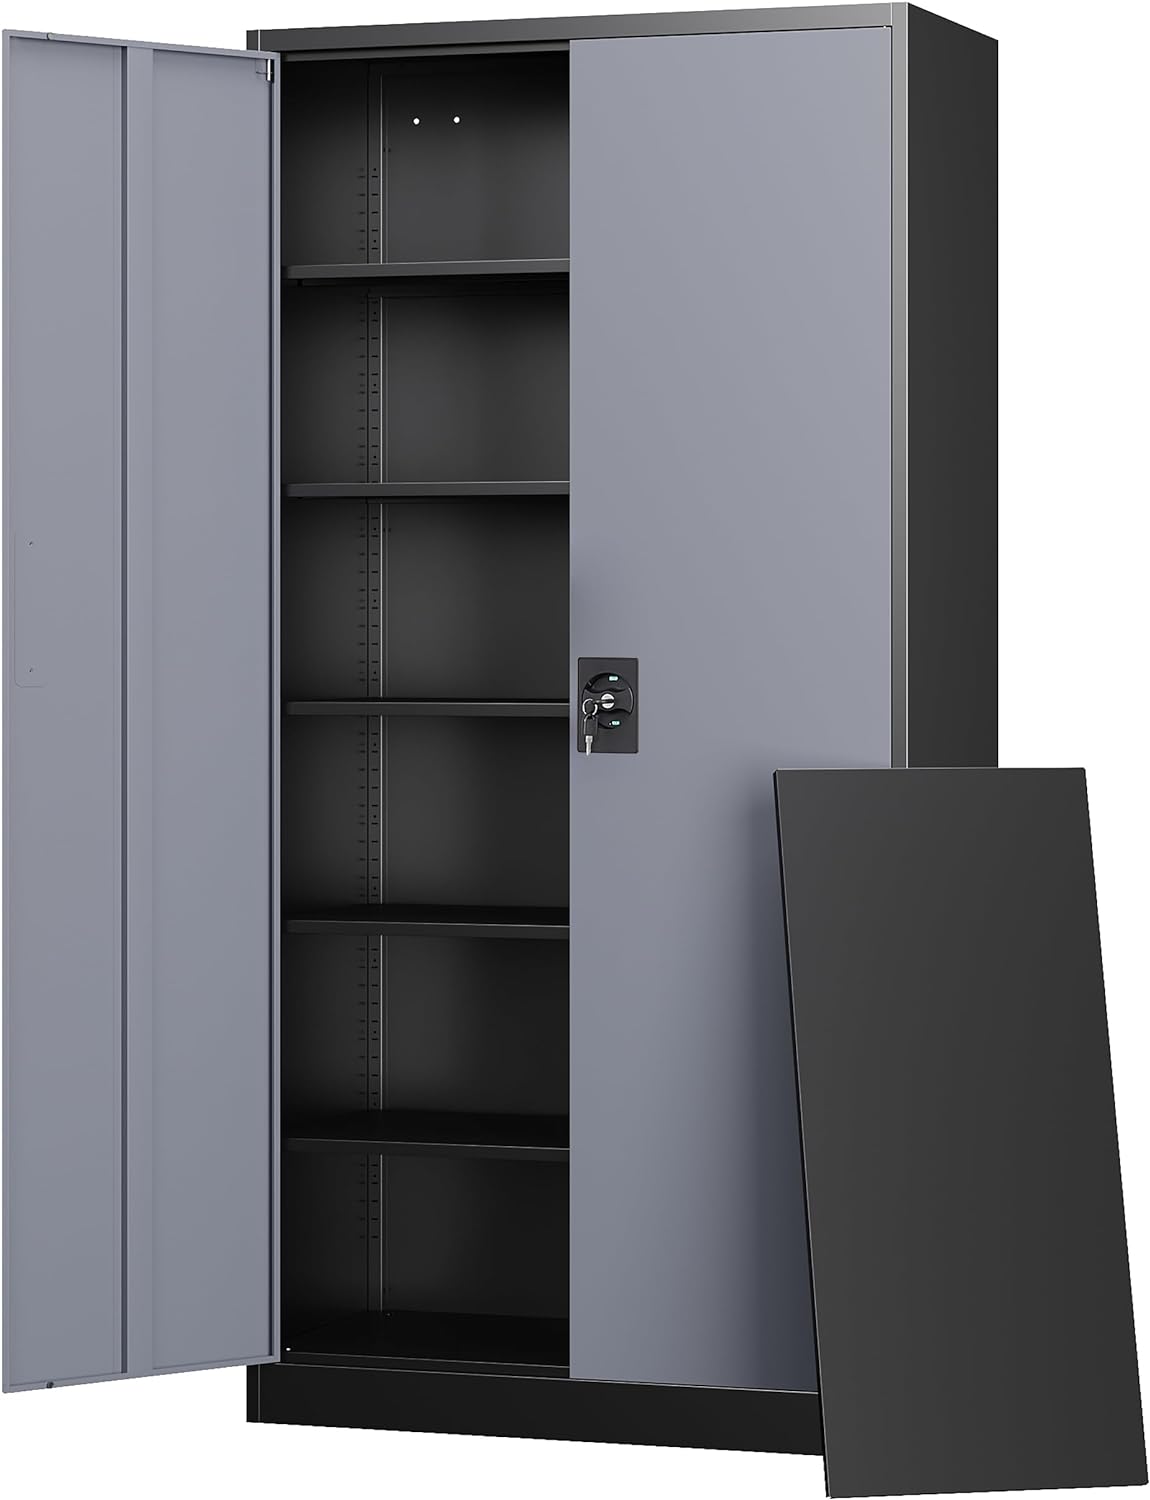 Letaya Metal Garage Storage Cabinets with Lock Door and Adjustable Shelves, Steel Tool Cabinets for Home,Office,Warehouse Organisieren (Black Grey, 72 H)